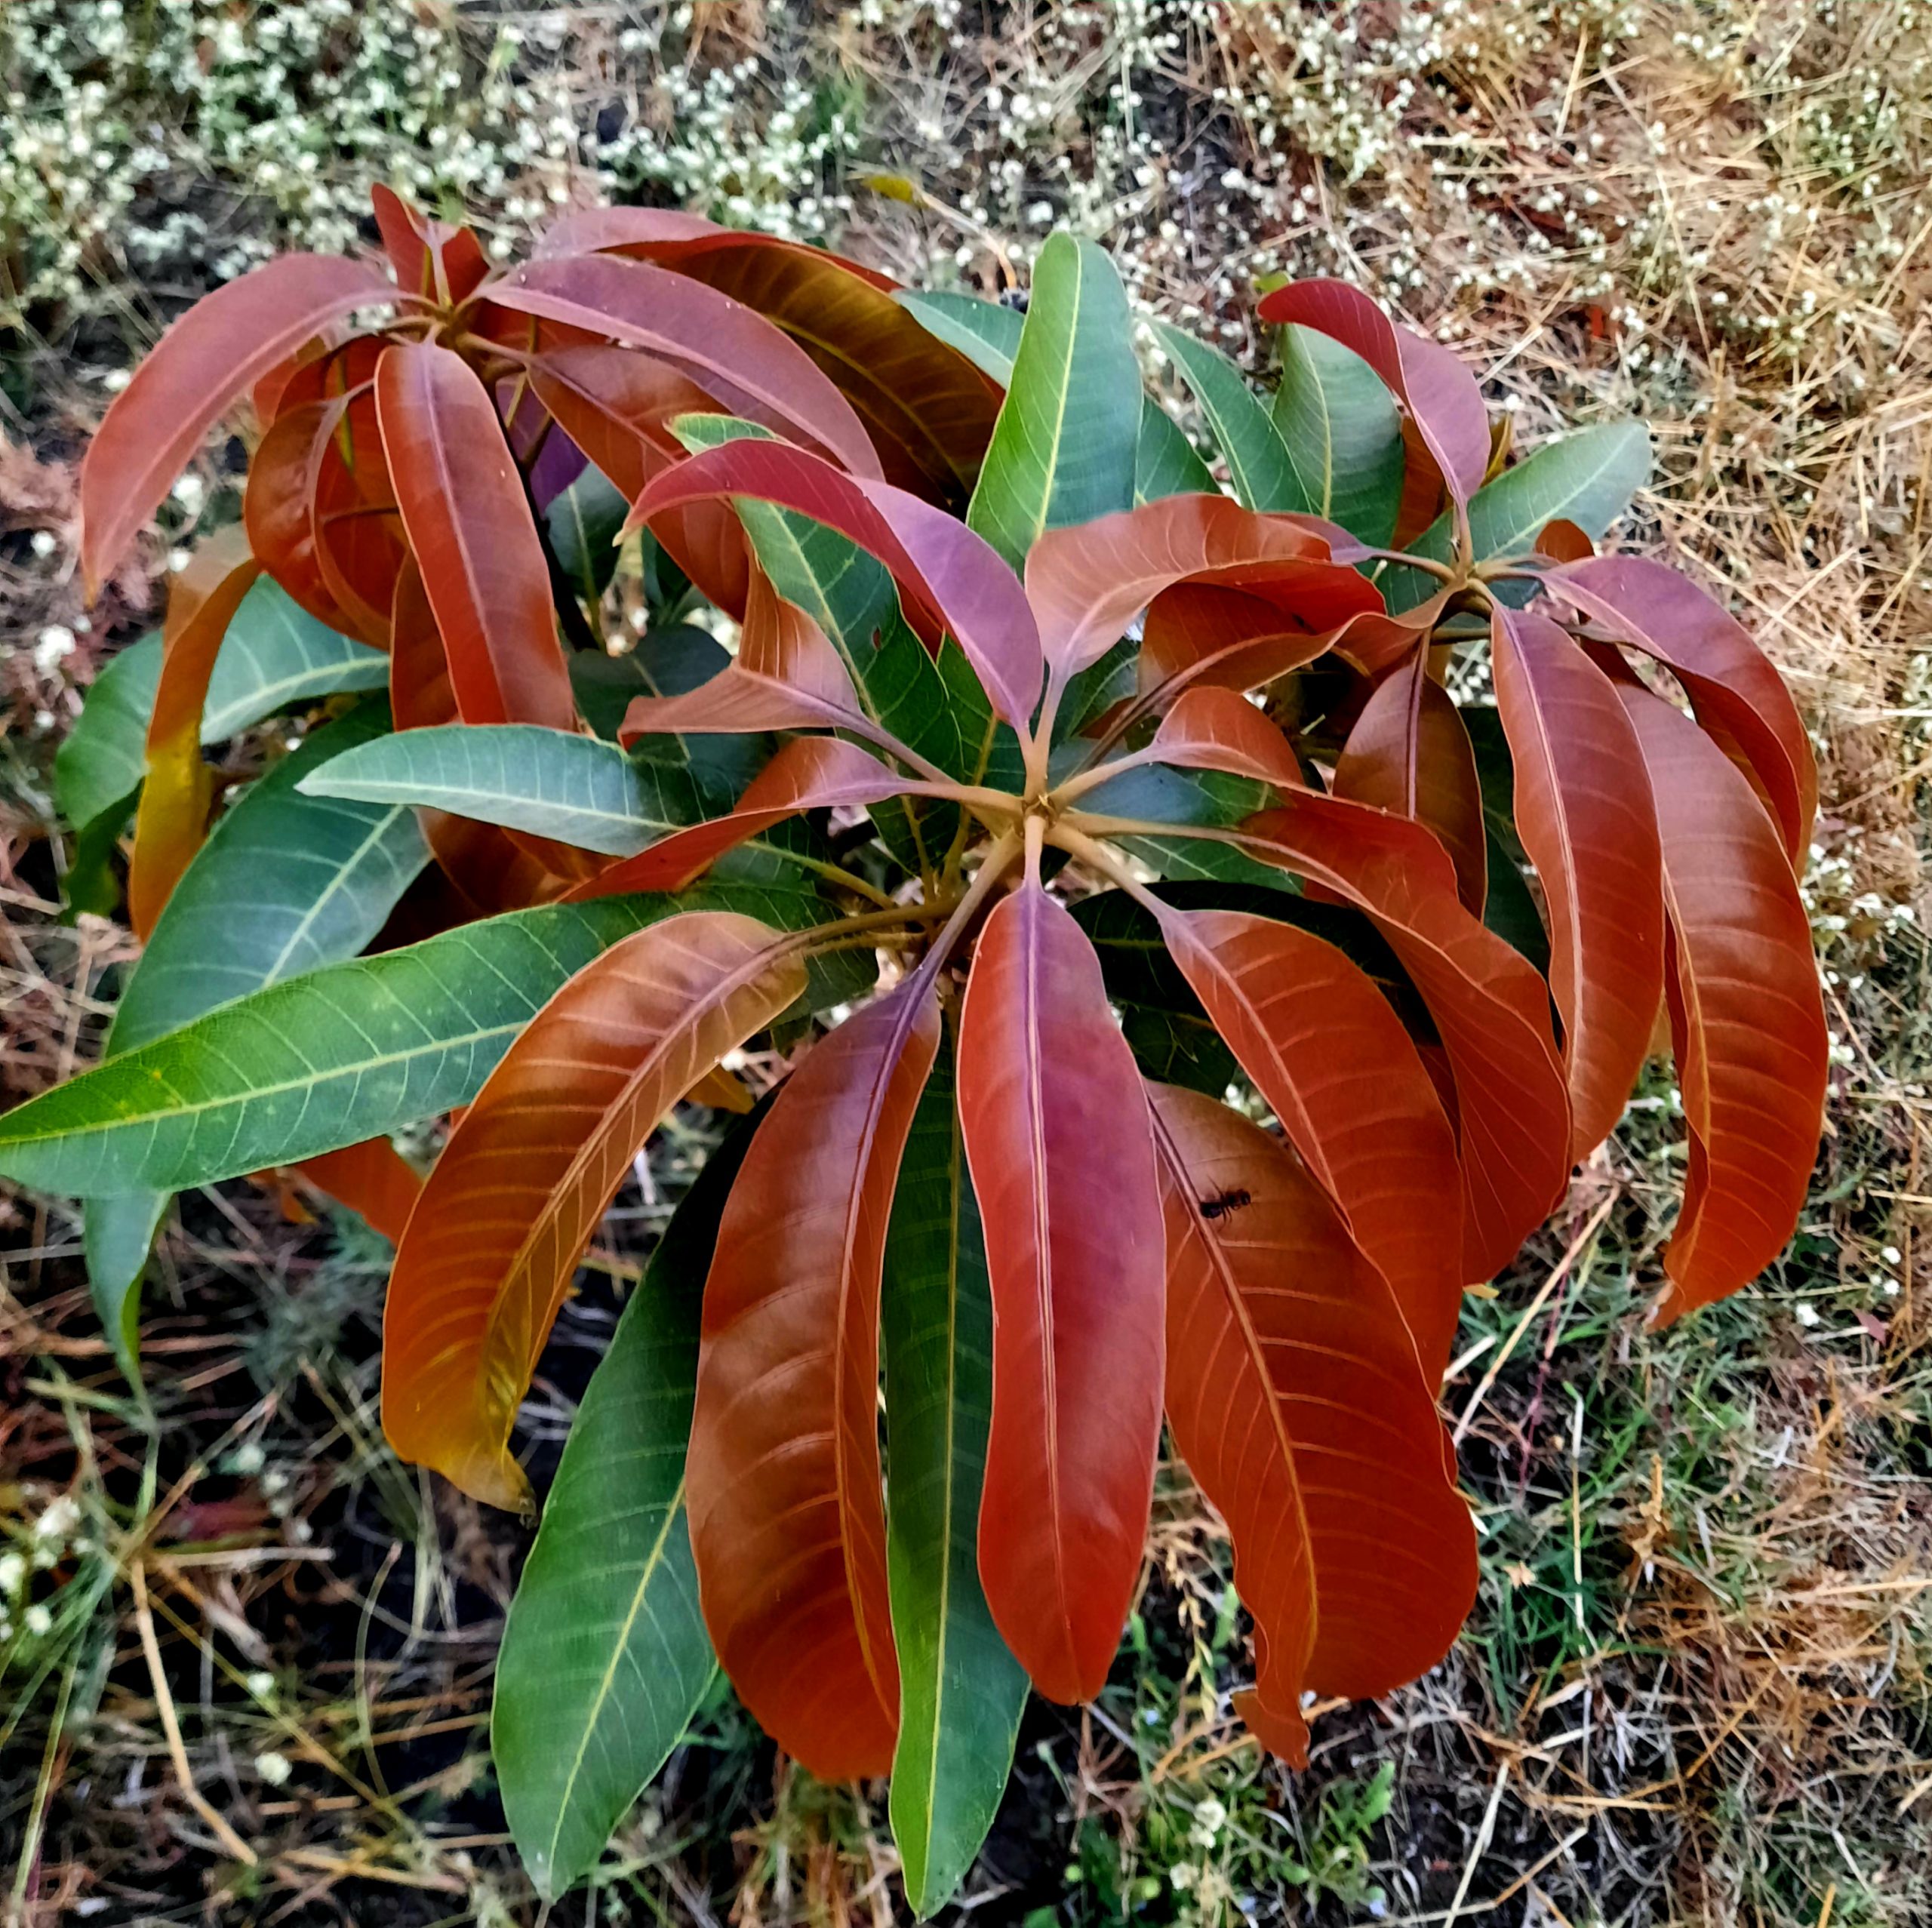 A mango plant